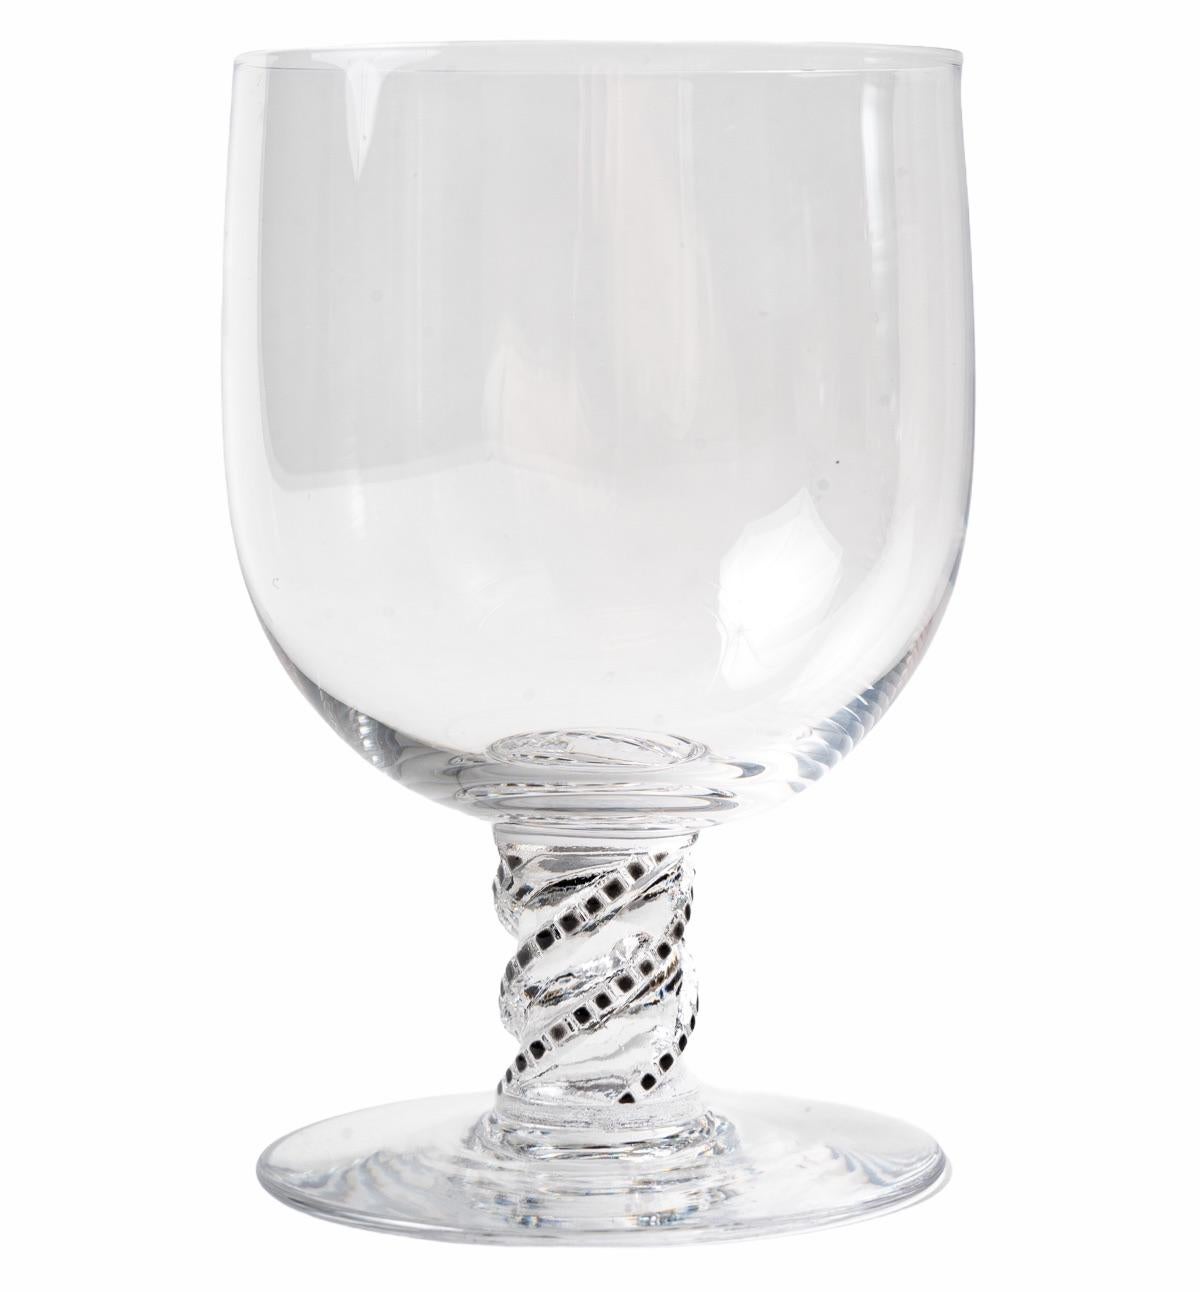 Molded René Lalique Complete Set 24 Pieces Enameled Glasses Beaune Champagne Water Wine